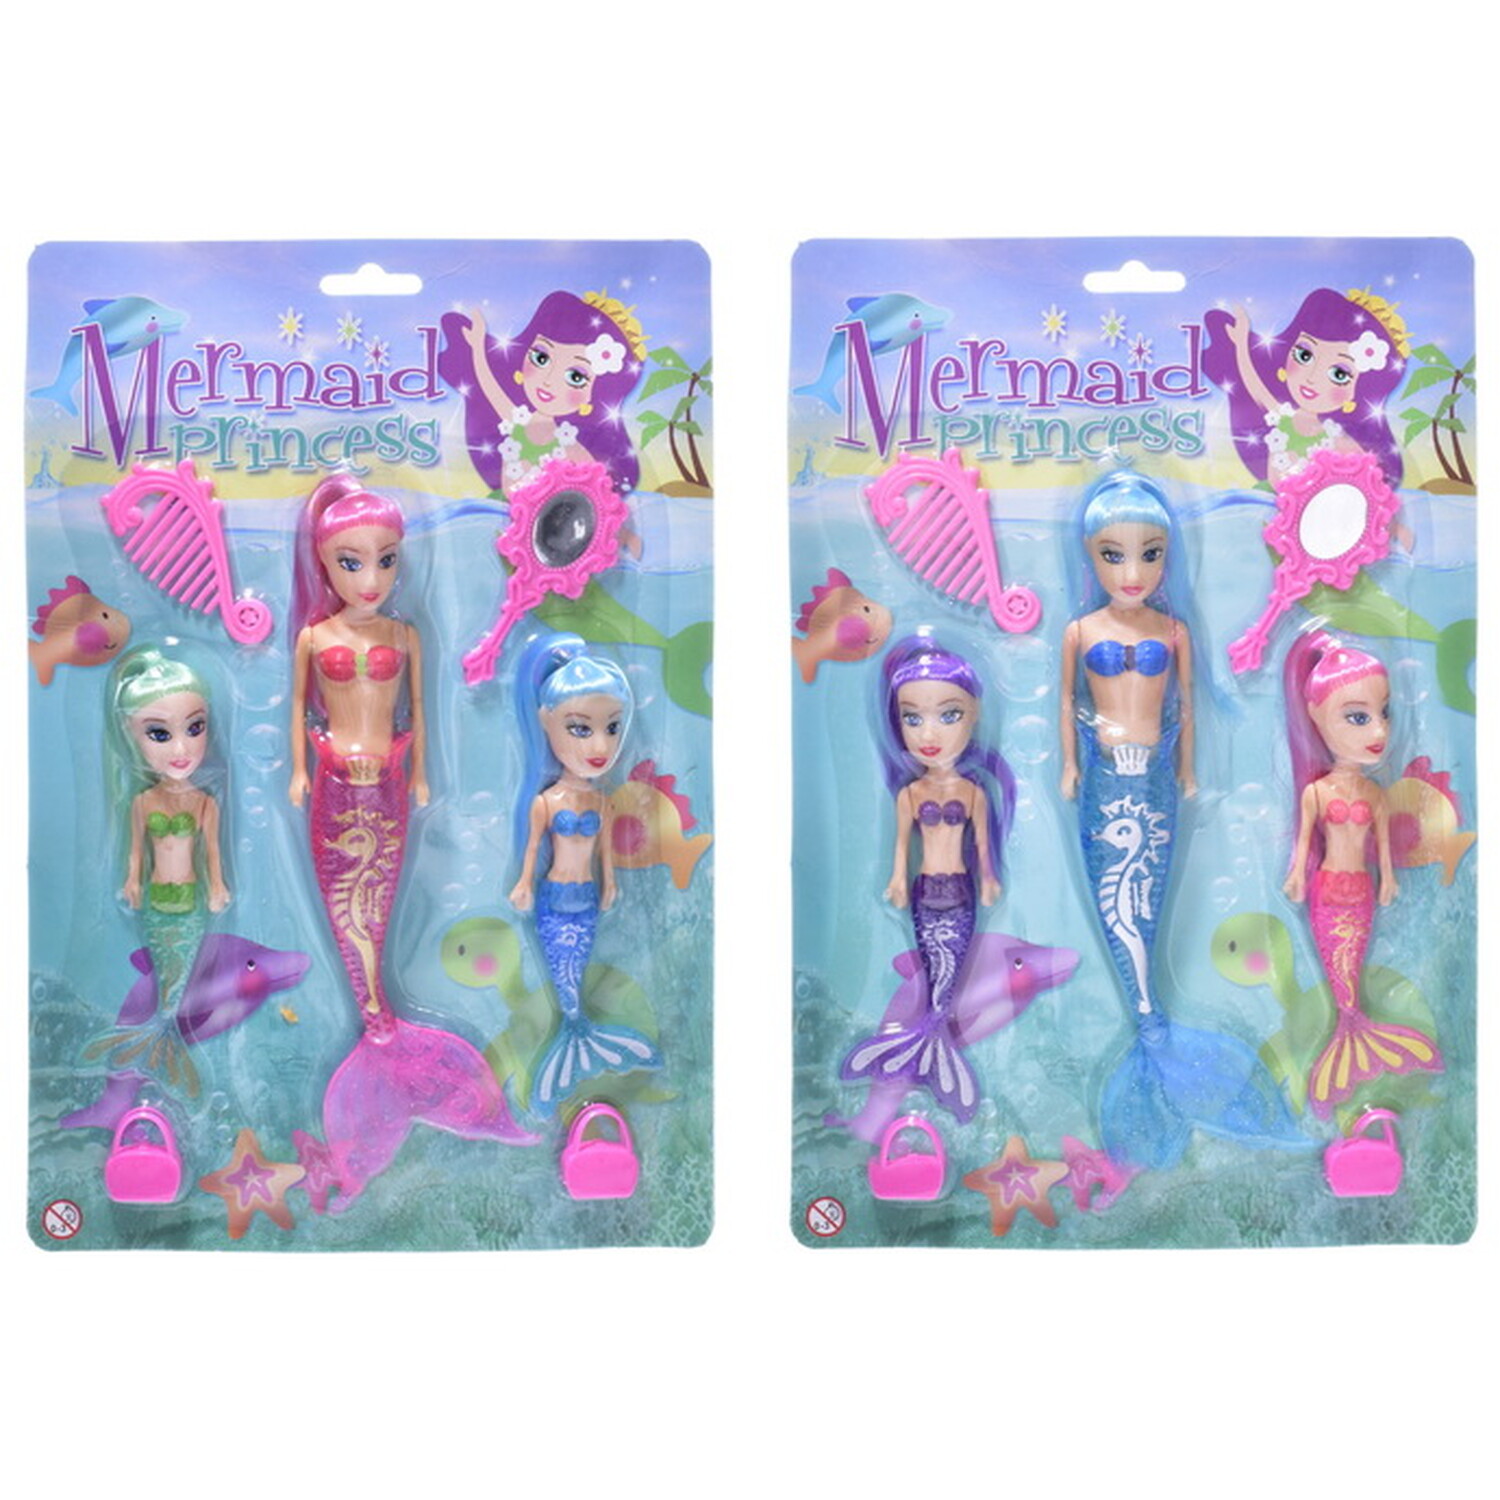 Single Mermaid Princess Dolls 3 Pack in Assorted styles Image